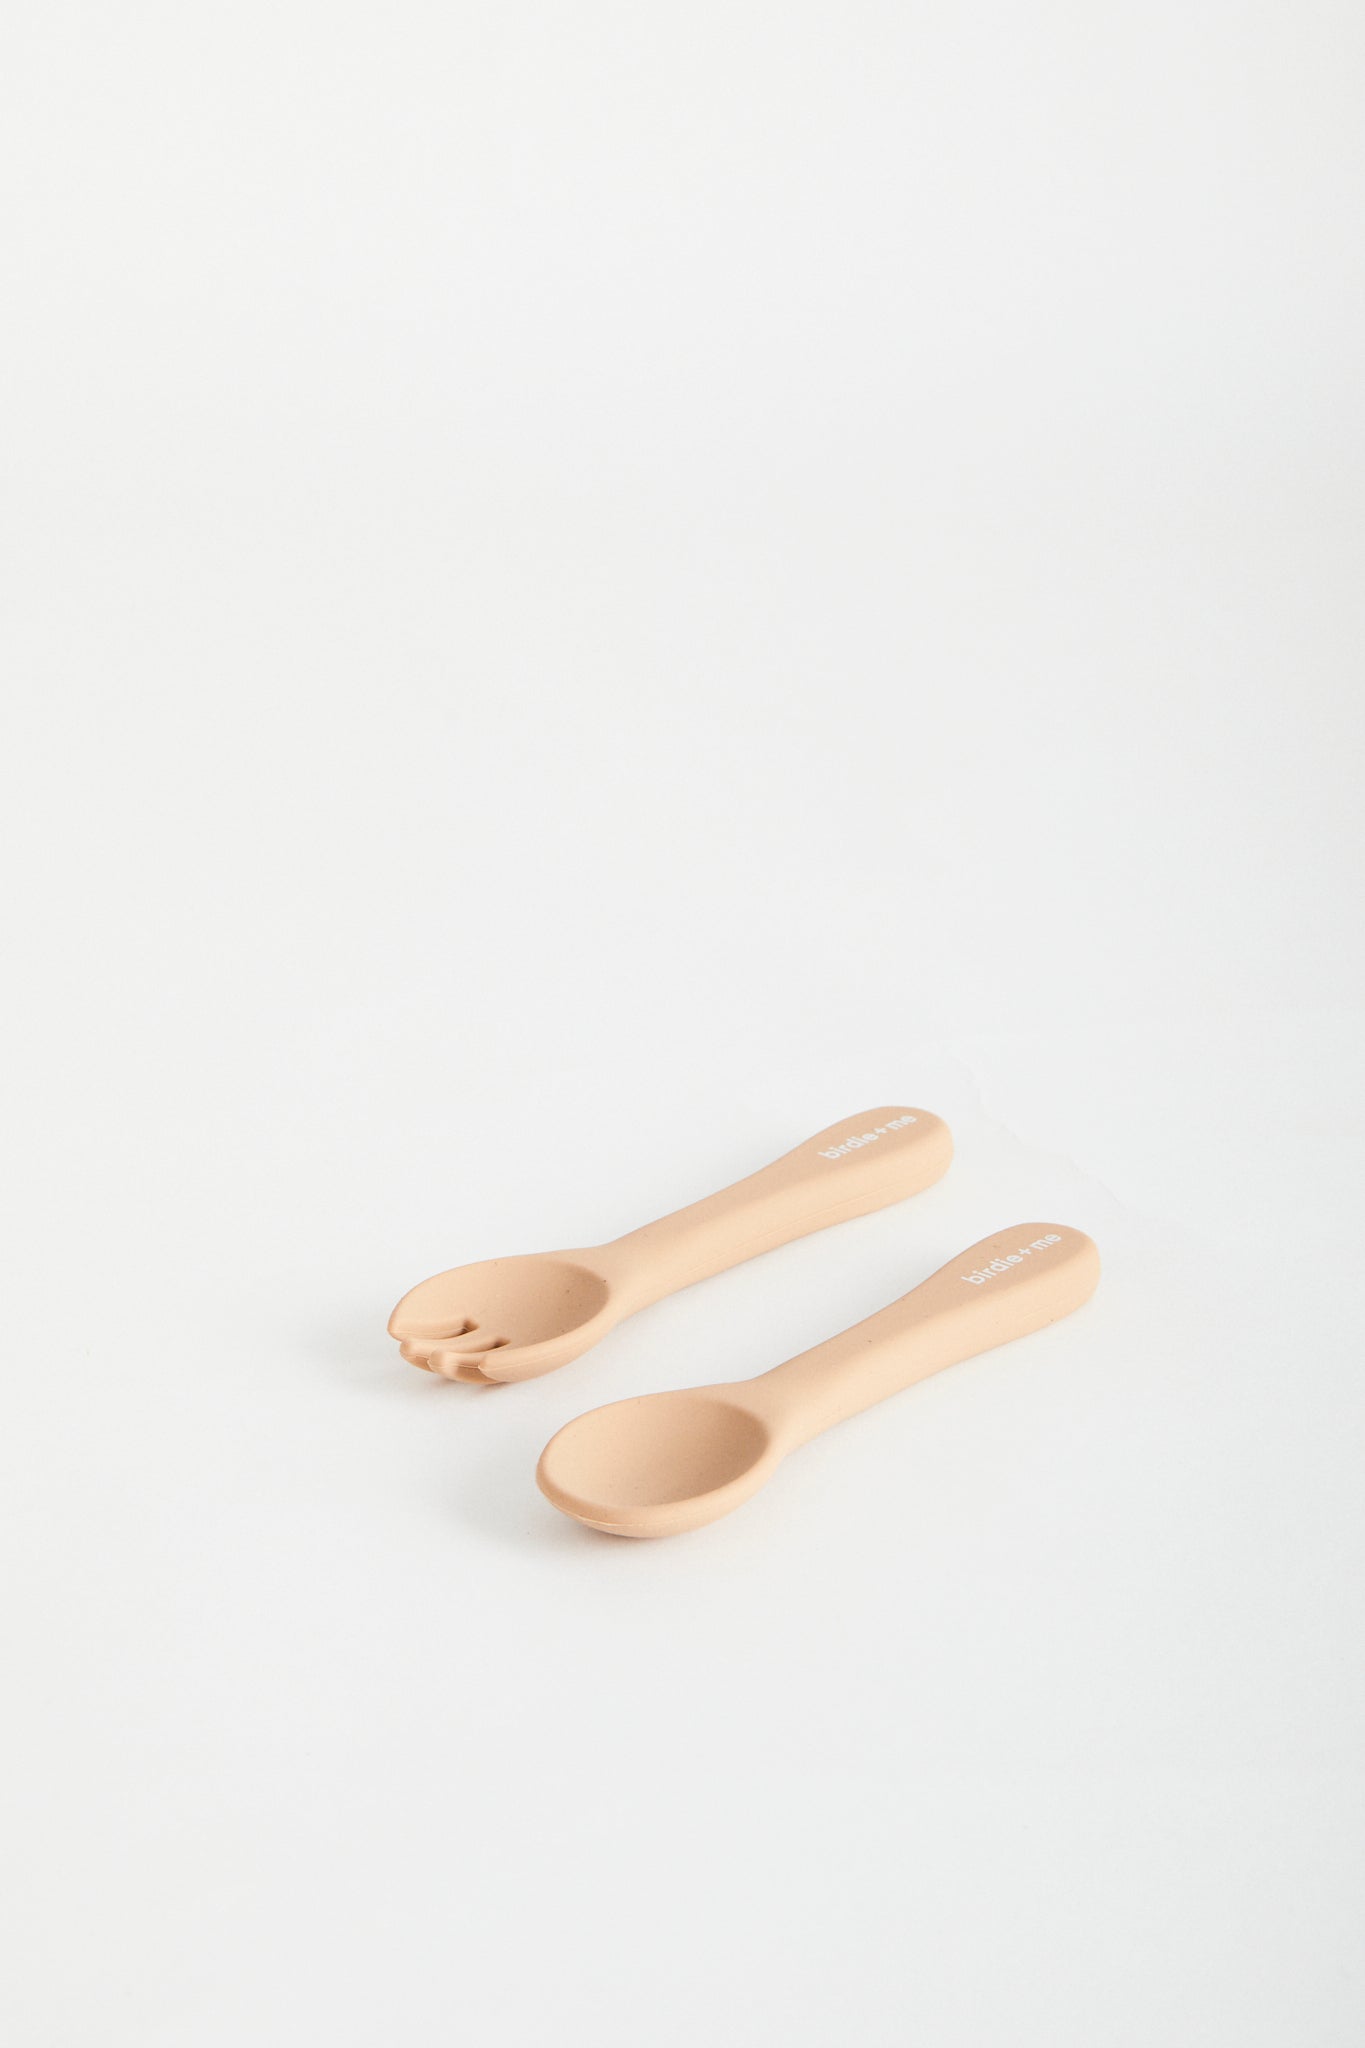 Silicon spoon & fork set in blush, birdie + me logo on handle.